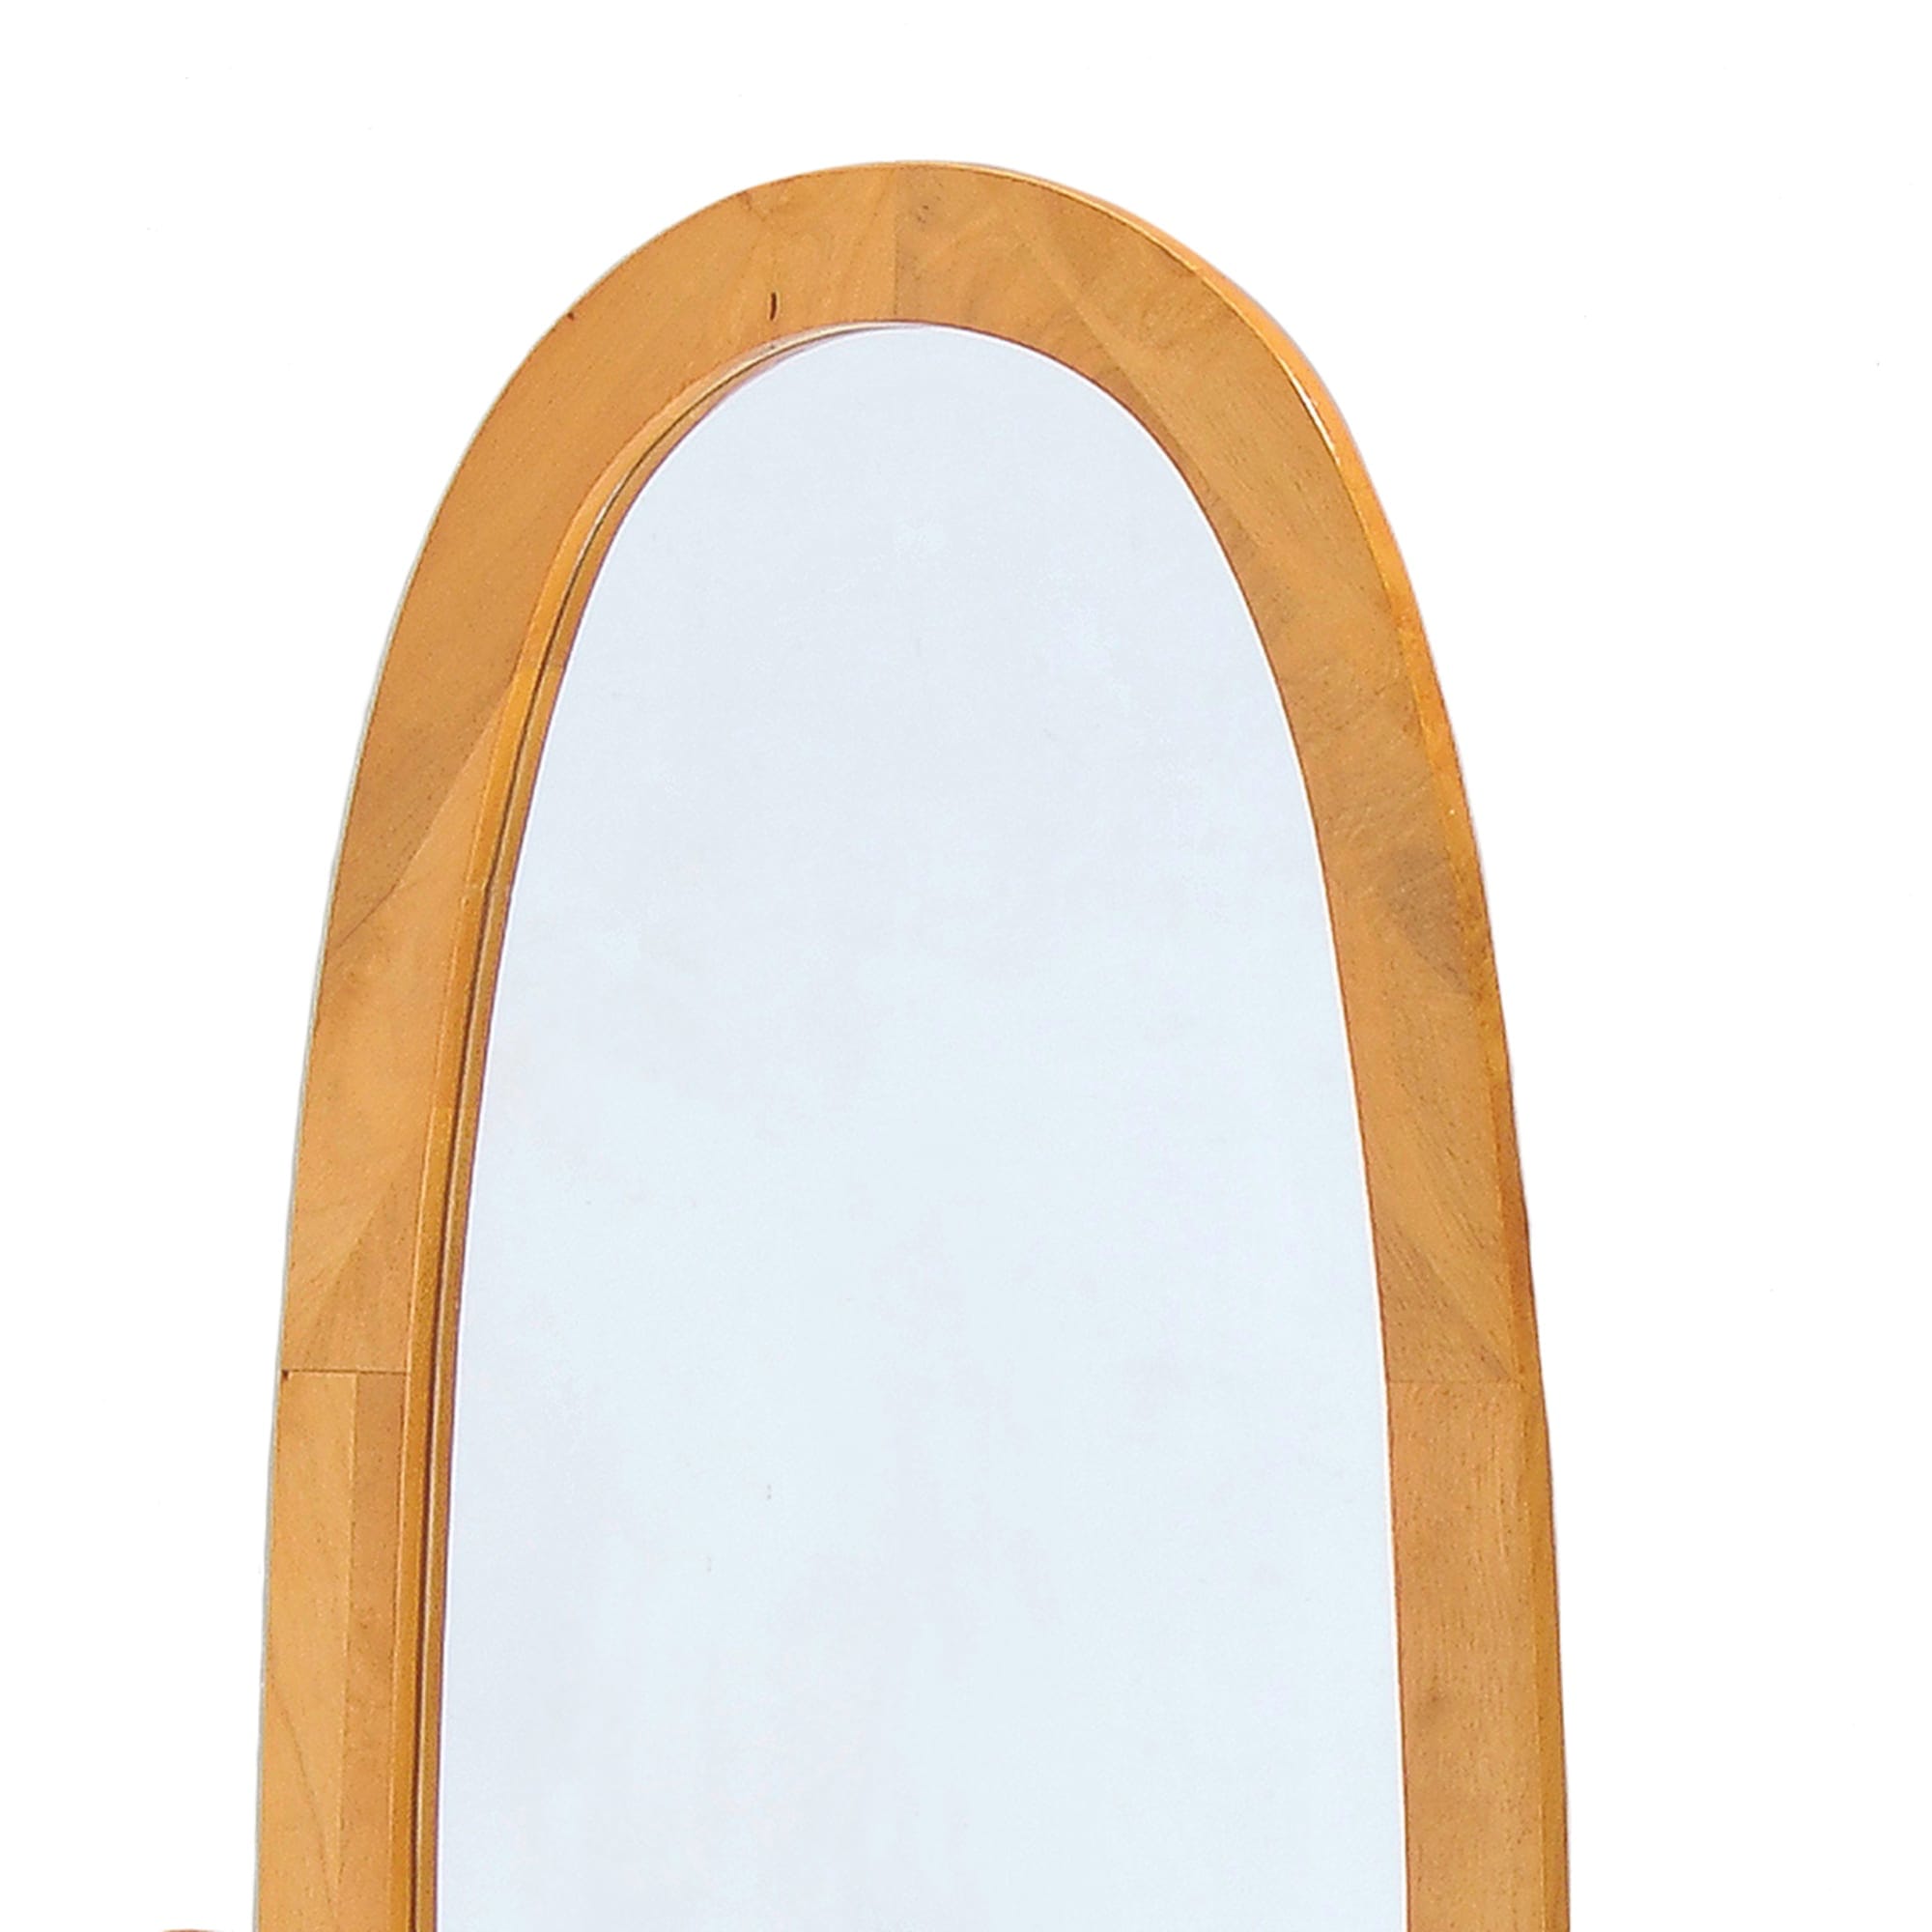 Home Basics Freestanding Oval Mirror, Oak $60.00 EACH, CASE PACK OF 1